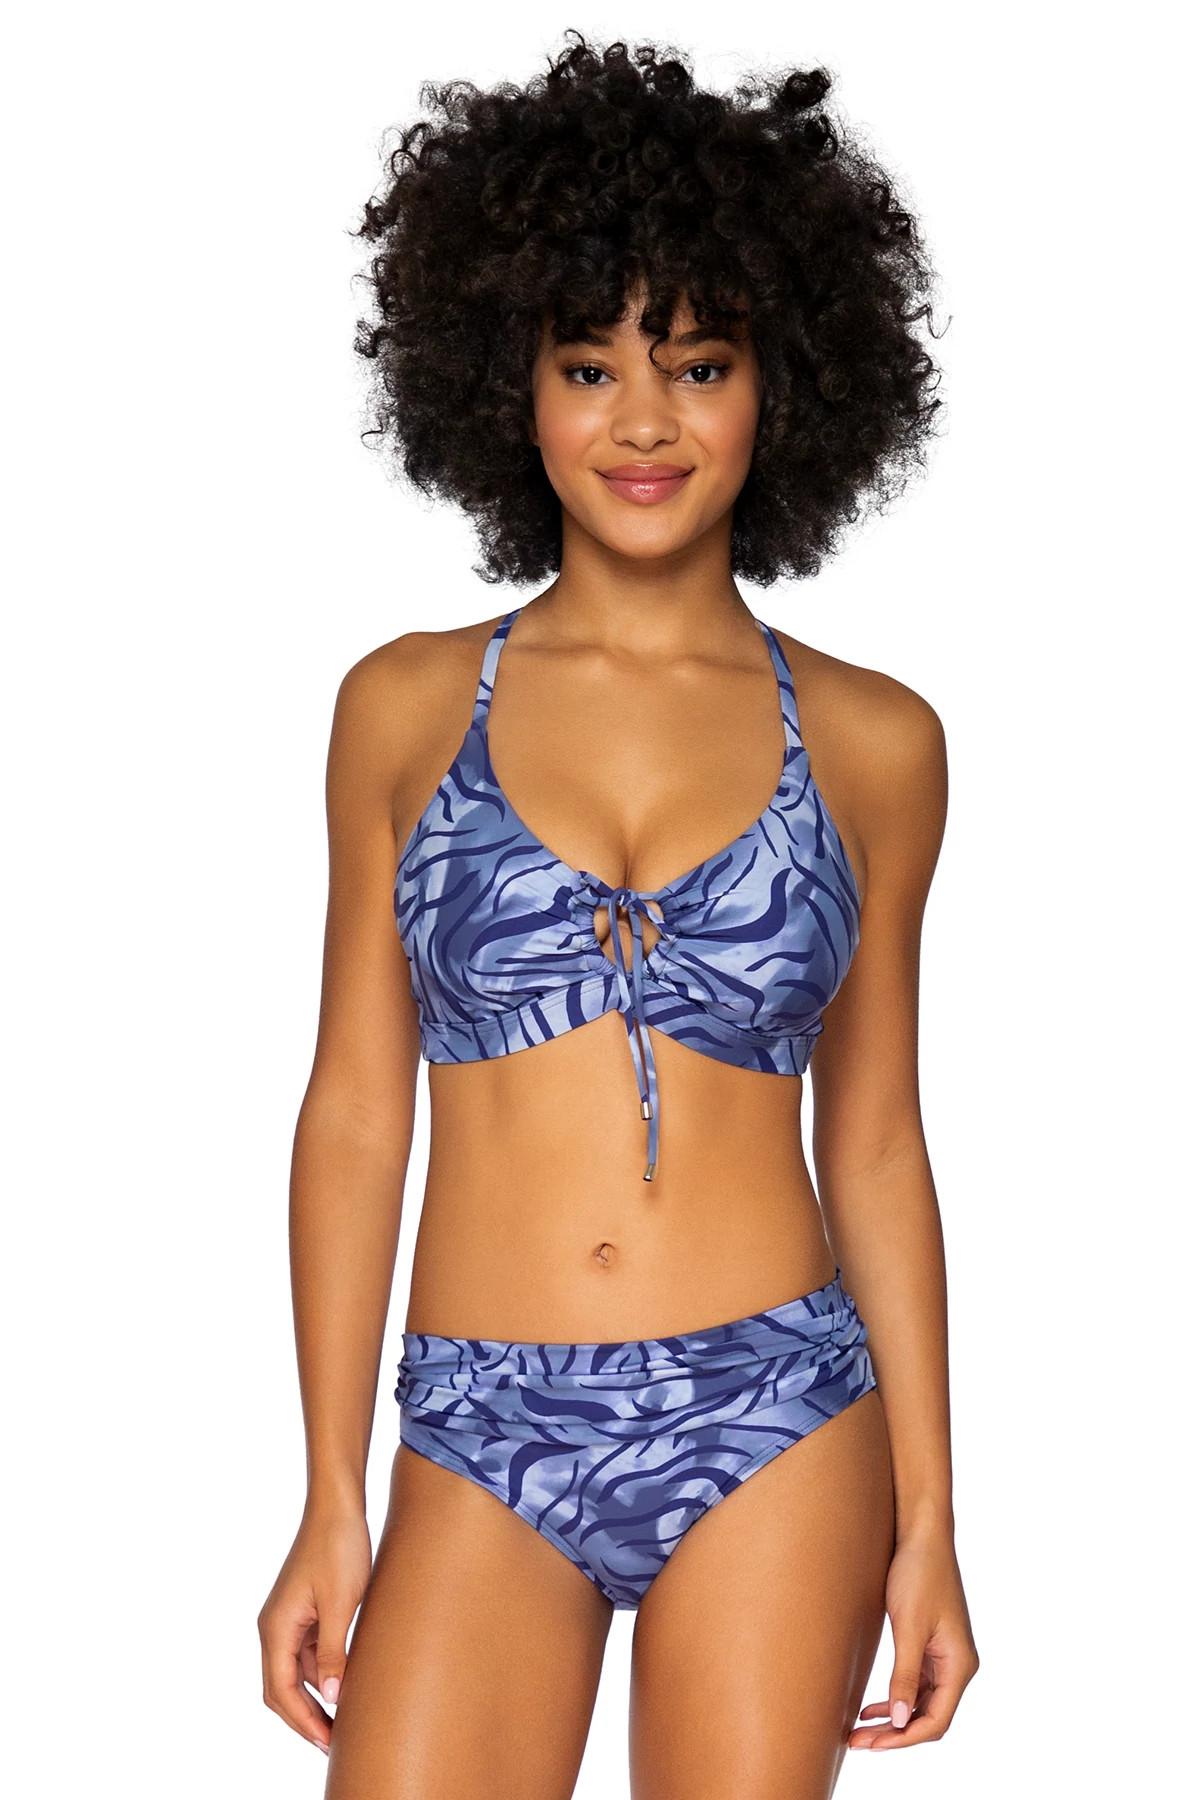 SUMATRA Kauai Underwire Bikini Top (E-H Cup) image number 1